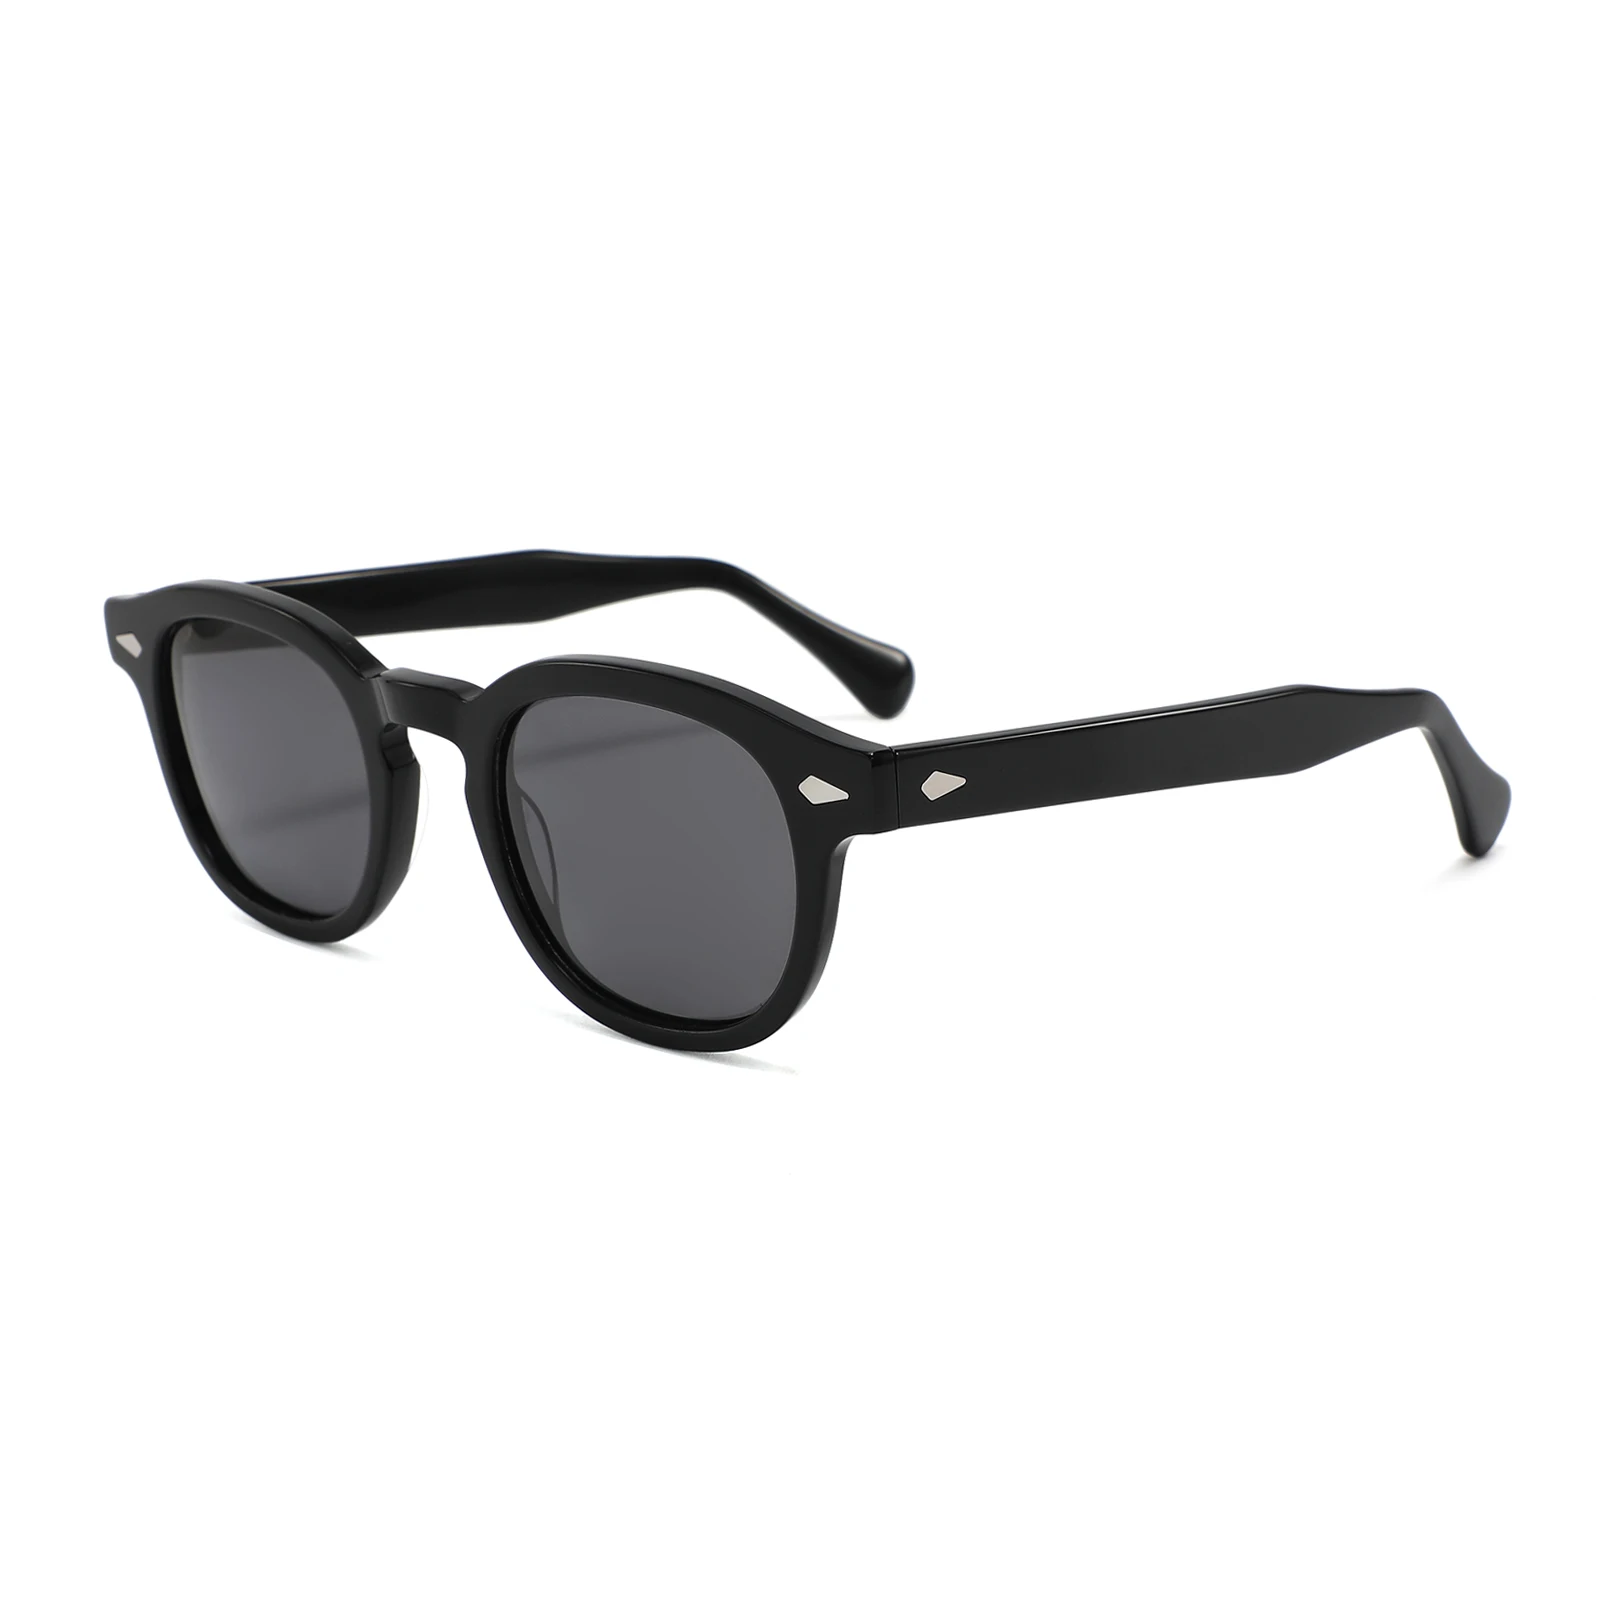 

2022 new arrival acetate frame sunglasses bose frame tempo brand name sunglasses, Custom color